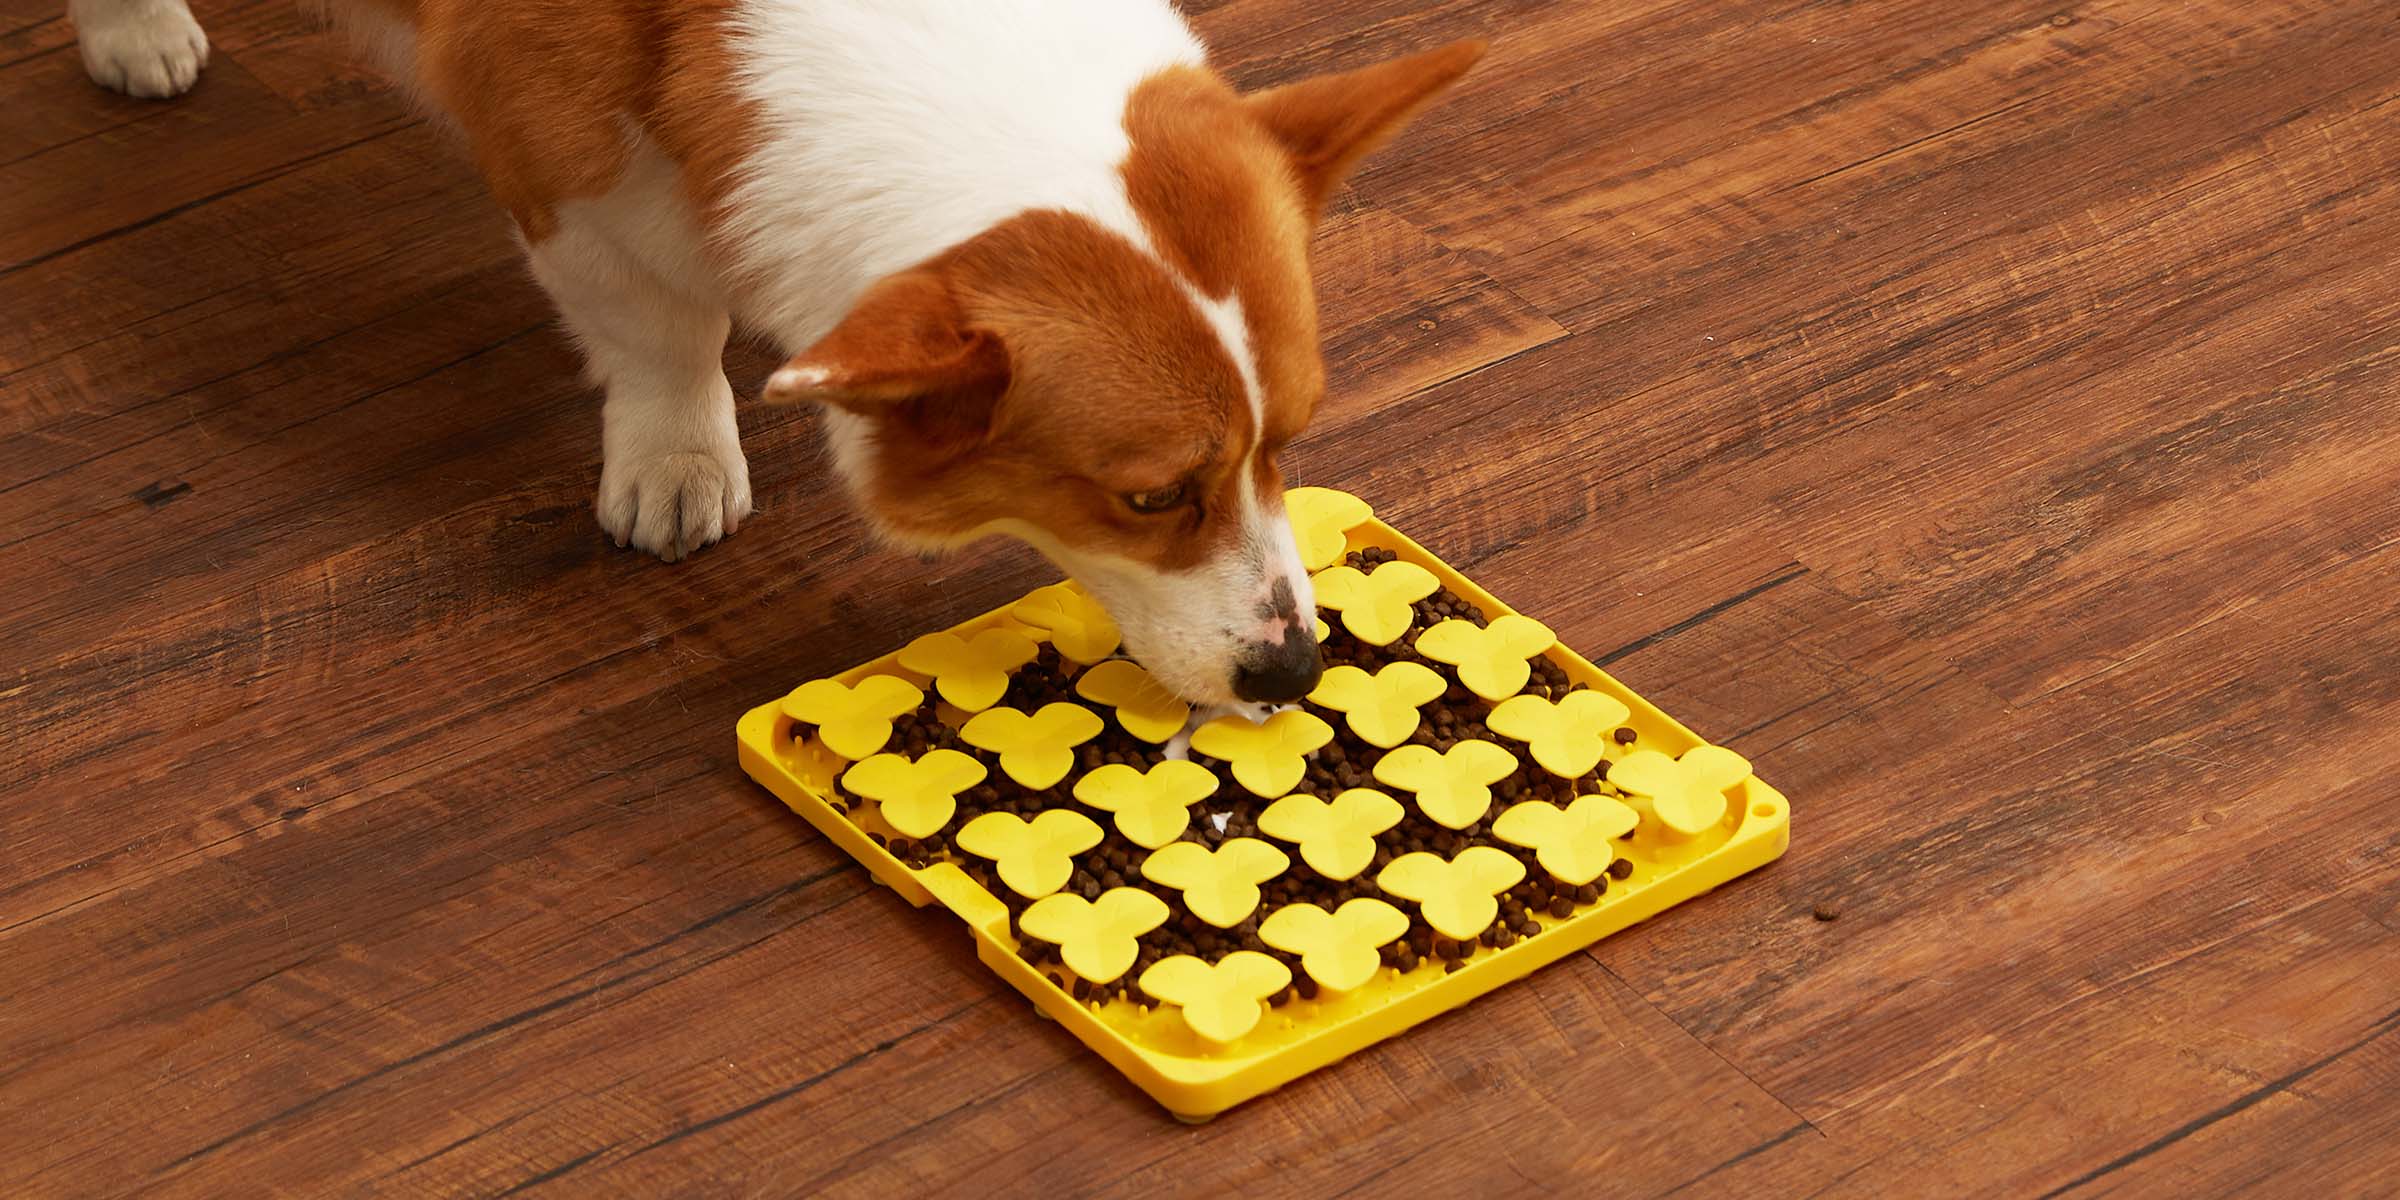 Buy Wholesale China Dog Puzzle Toys -toys For Large Dogs, Treat